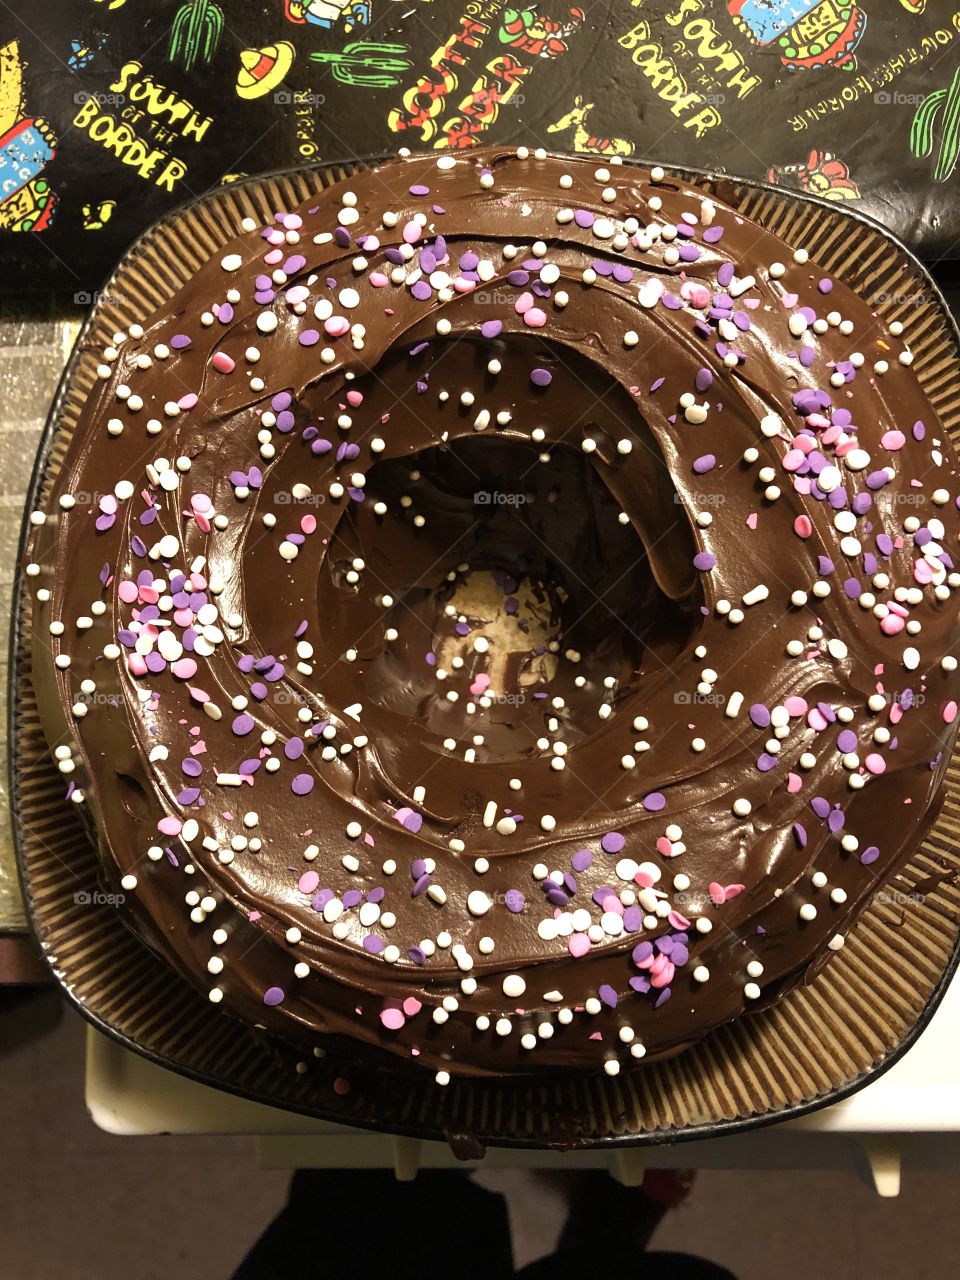 Chocolate cake with snow flakes...Mina 1017